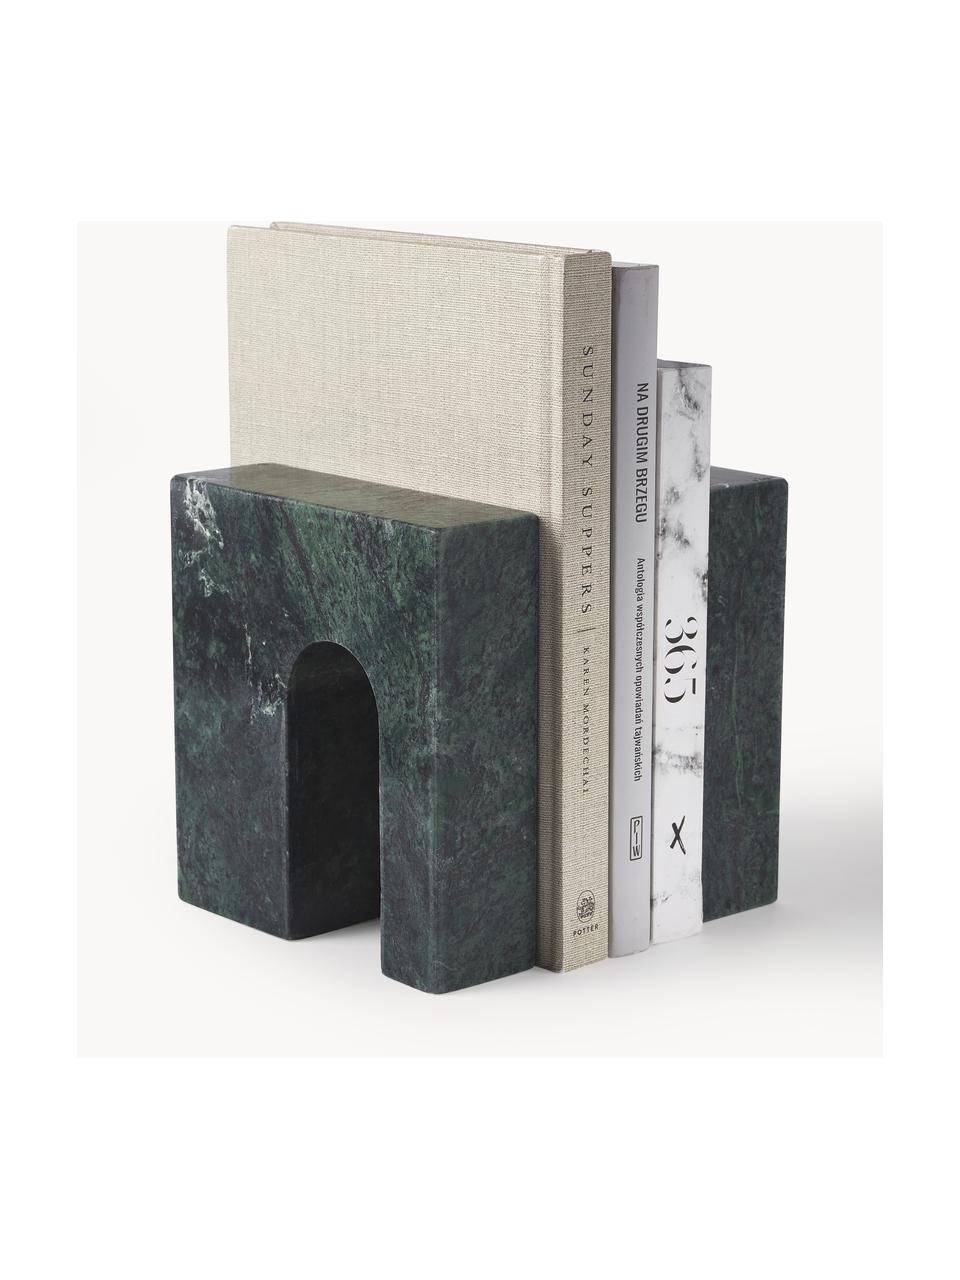 Serre-livres en marbre Kai, 2 élém., Marbre, Vert, marbré, larg. 17 x haut. 16 cm